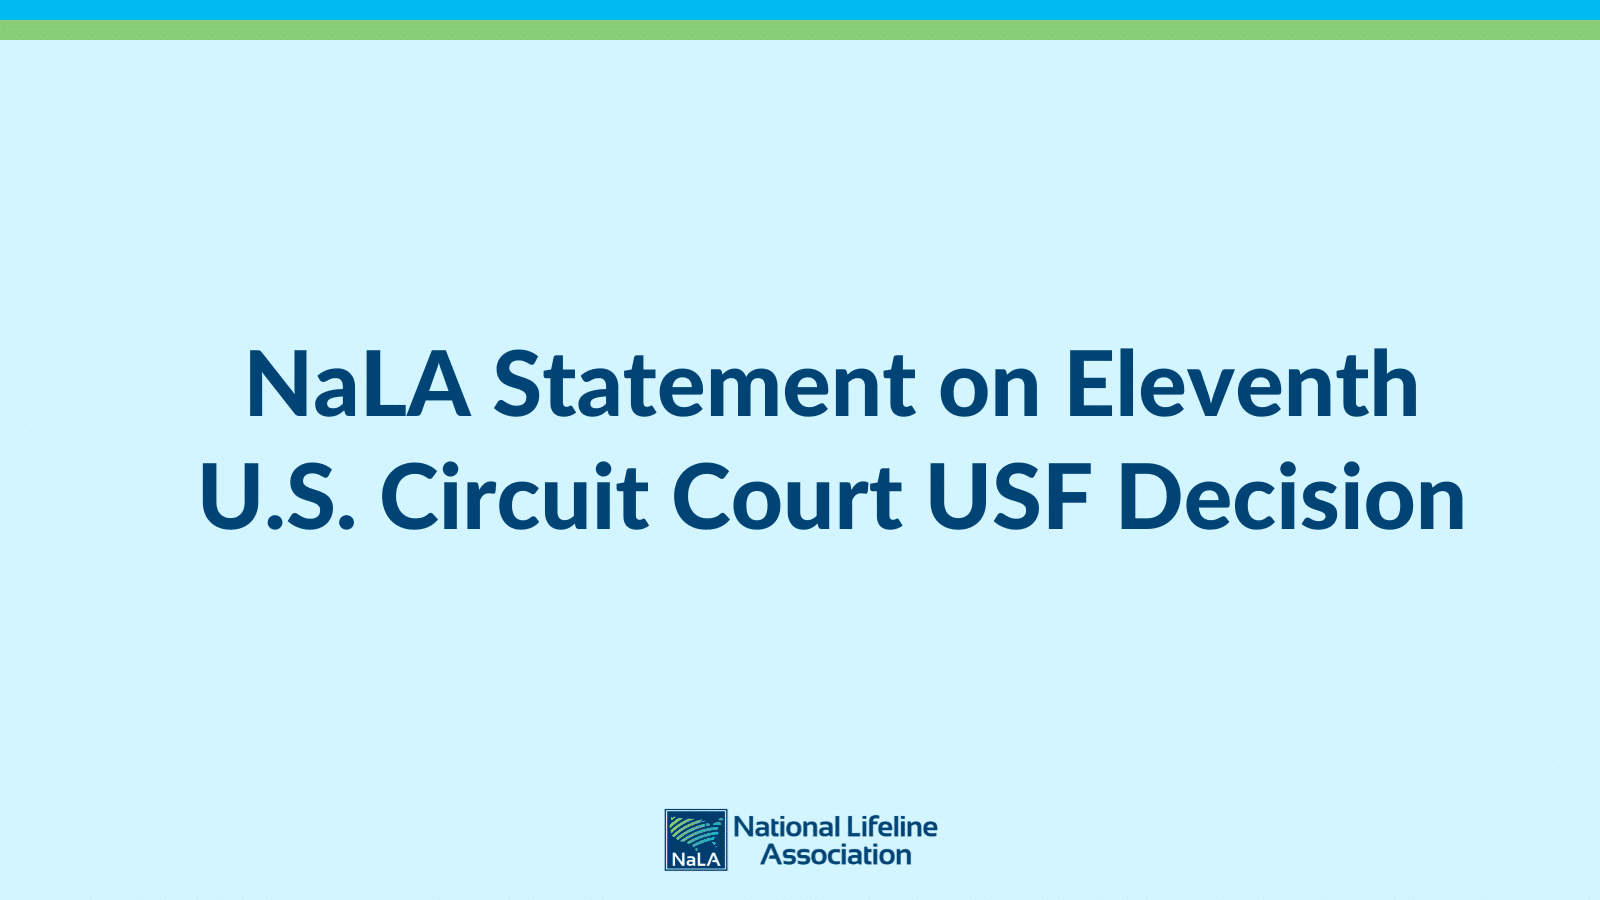 NaLA Statement on Eleventh Circuit Court USF Decision